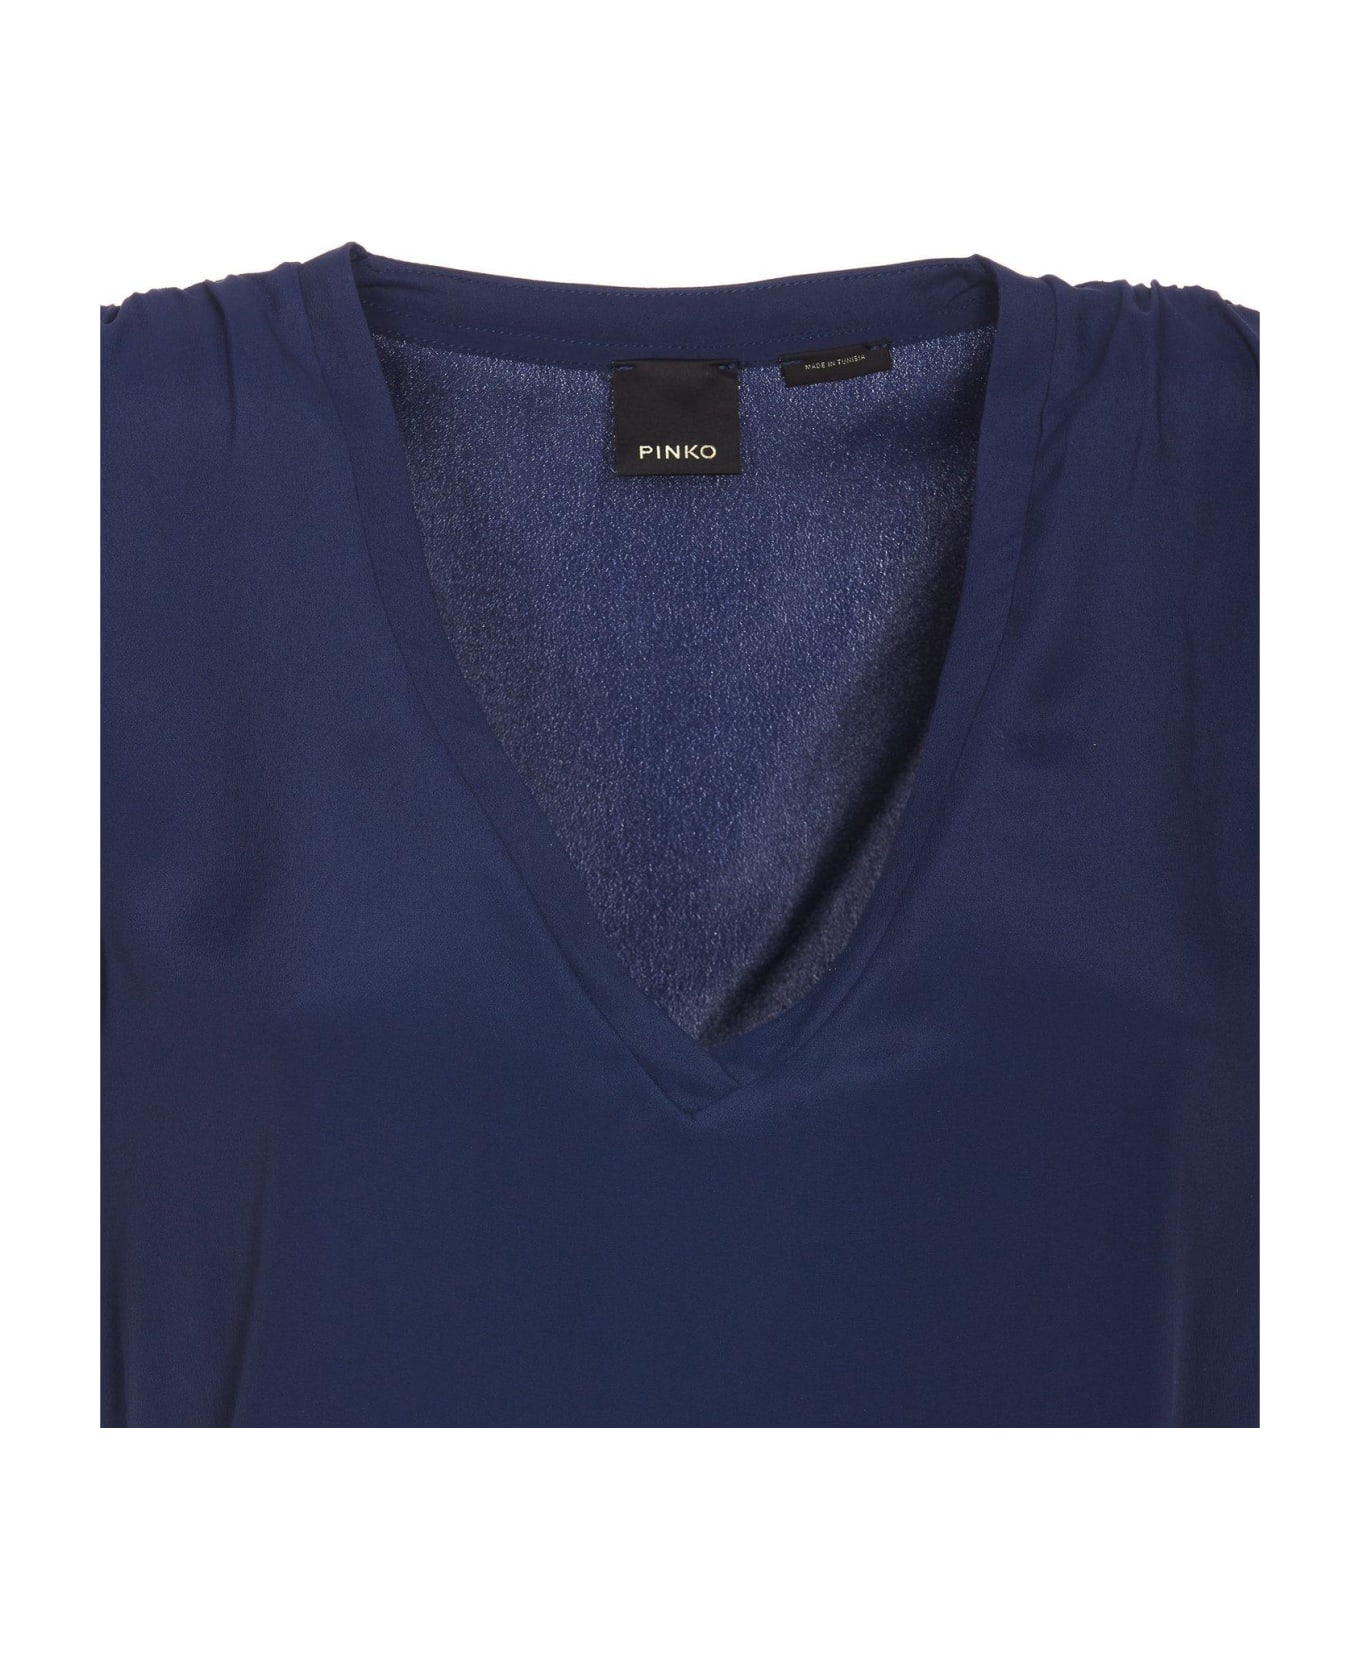 Pinko V-neck Curved Hem T-shirt - Blue Tシャツ